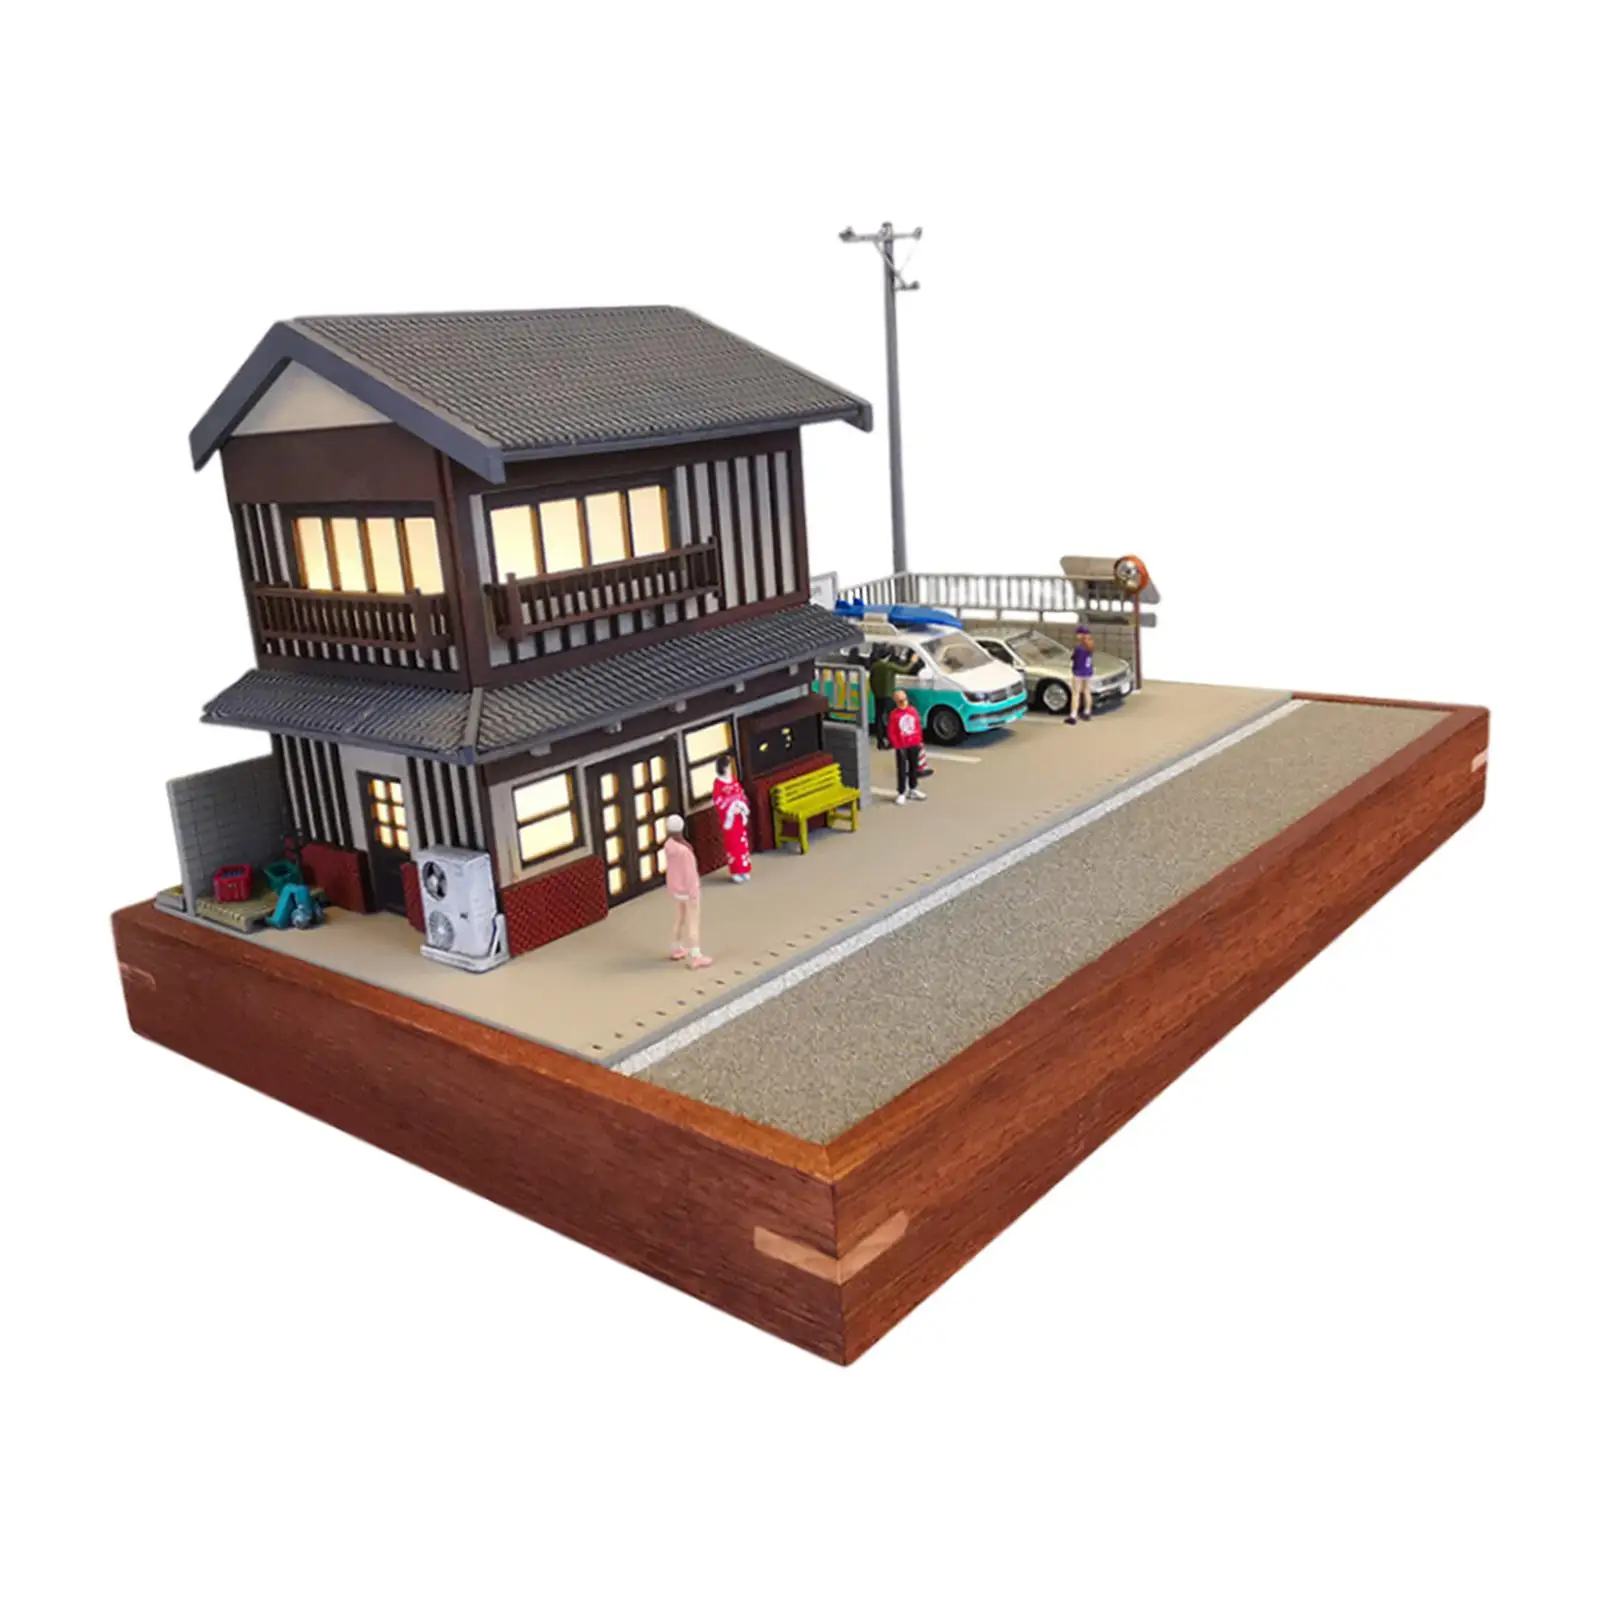 1/64 Model House 1/64 Parking Lot Model for Diorama Layout Miniature Scene Layout Train Railway Decor Sand Table Decor